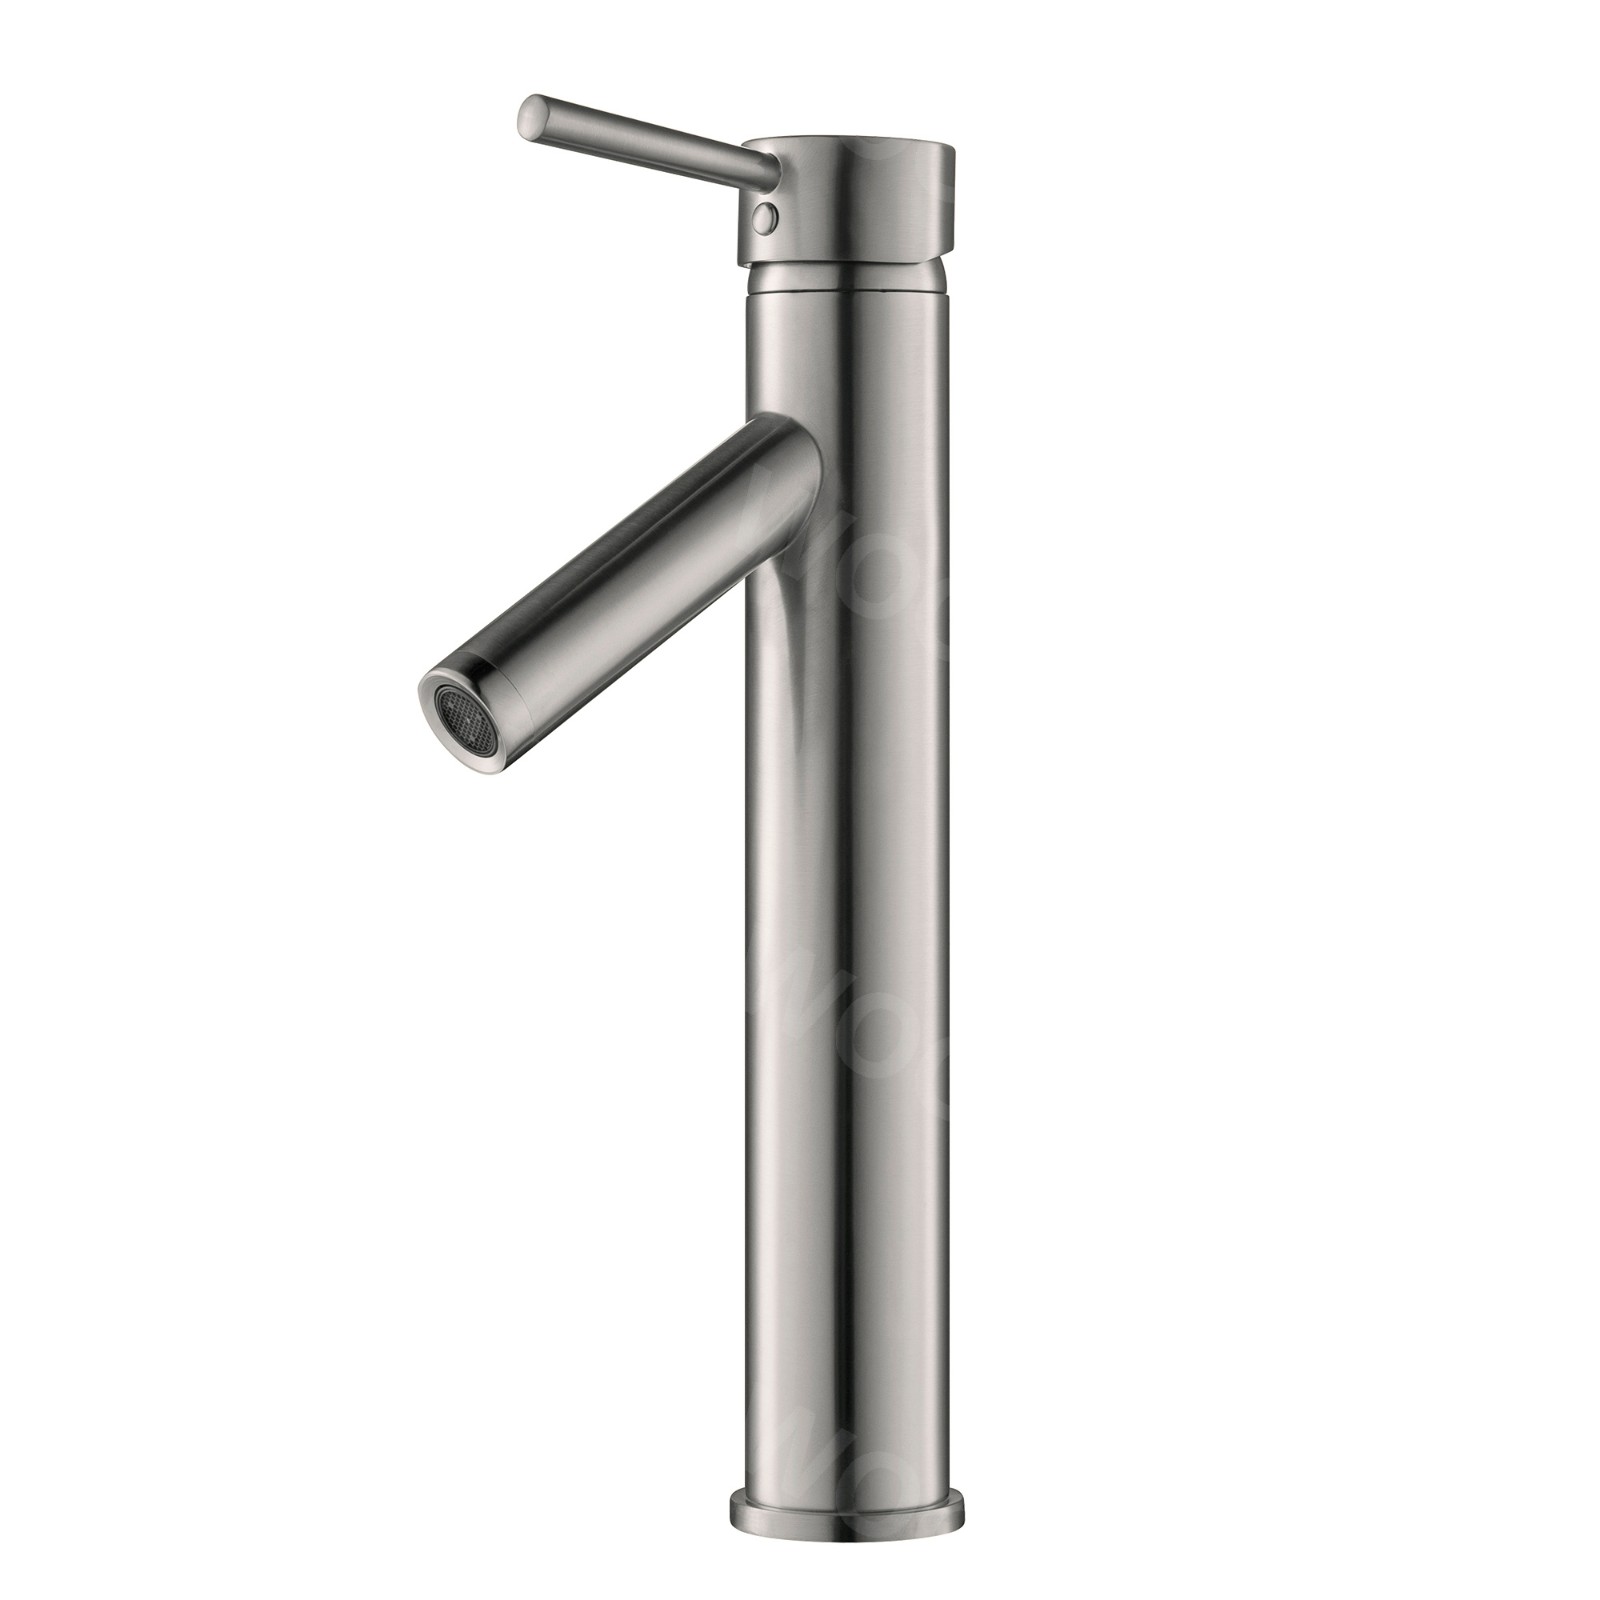  WOODBRIDGE WB2019040 BN Single Hole Single Handle Lavatory Faucet, Brushed Nickel_6315